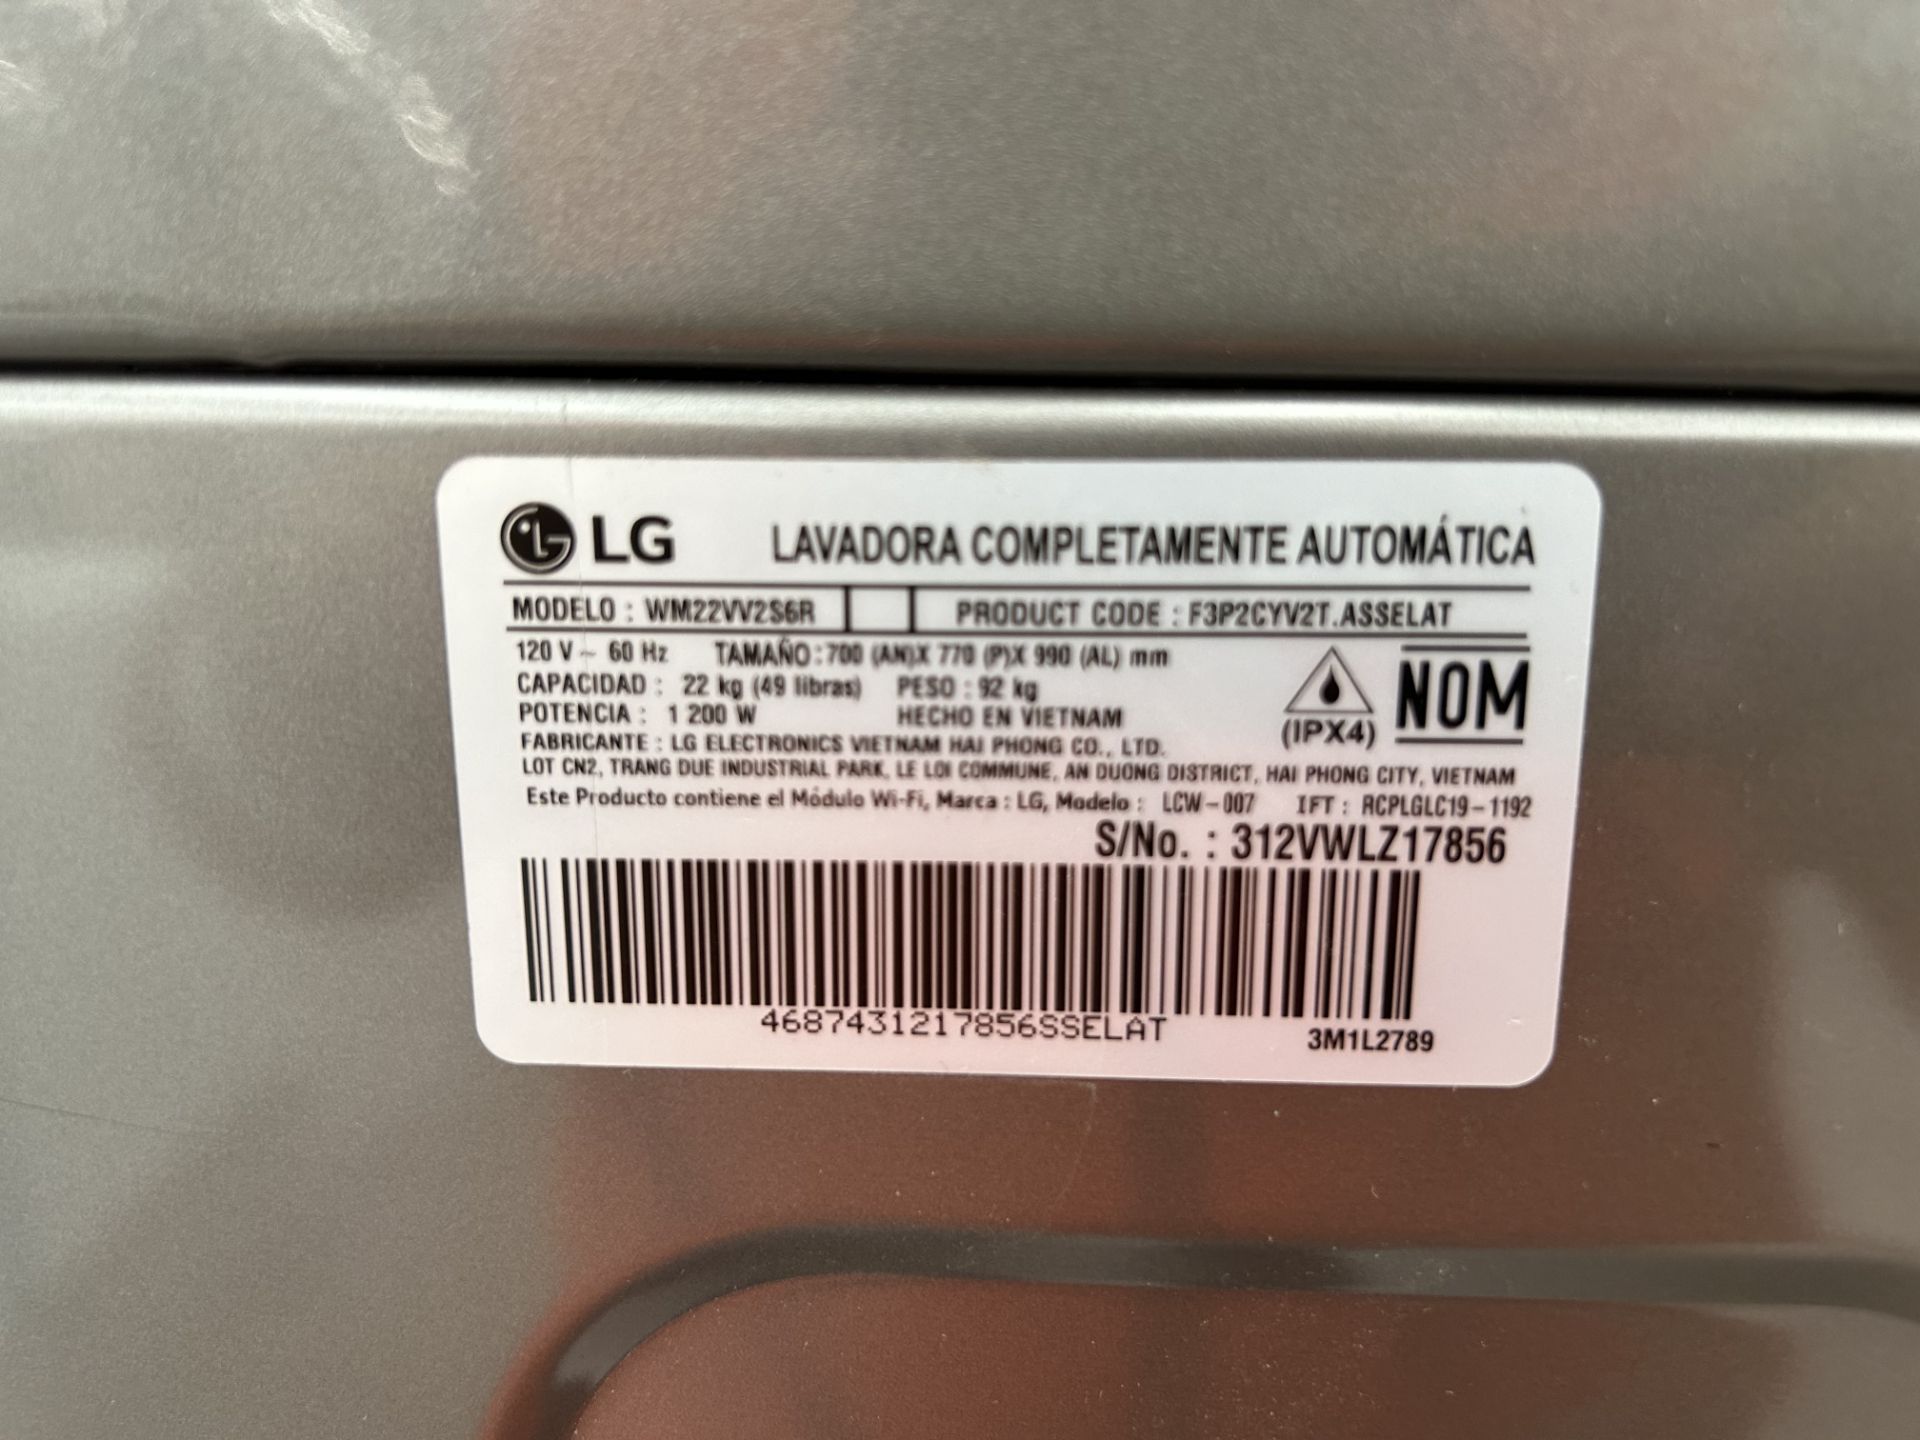 Lavadora Frontal de 22 Kg con pedestal integrado Marca LG Modelo WM22W2S6R, Serie Z17856, Color GRI - Image 5 of 8